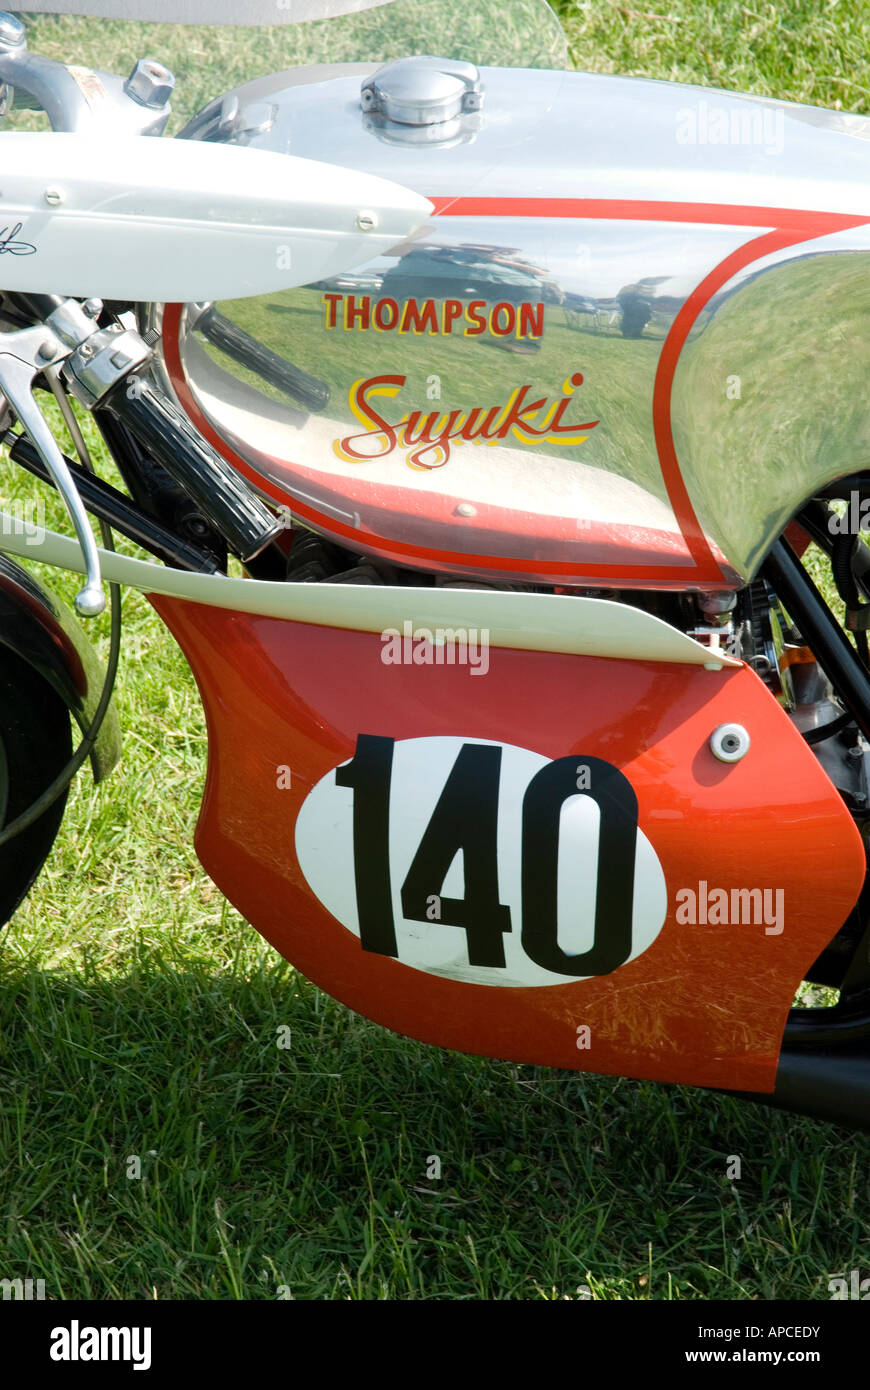 [Image: number-140-on-racing-bike-APCEDY.jpg]